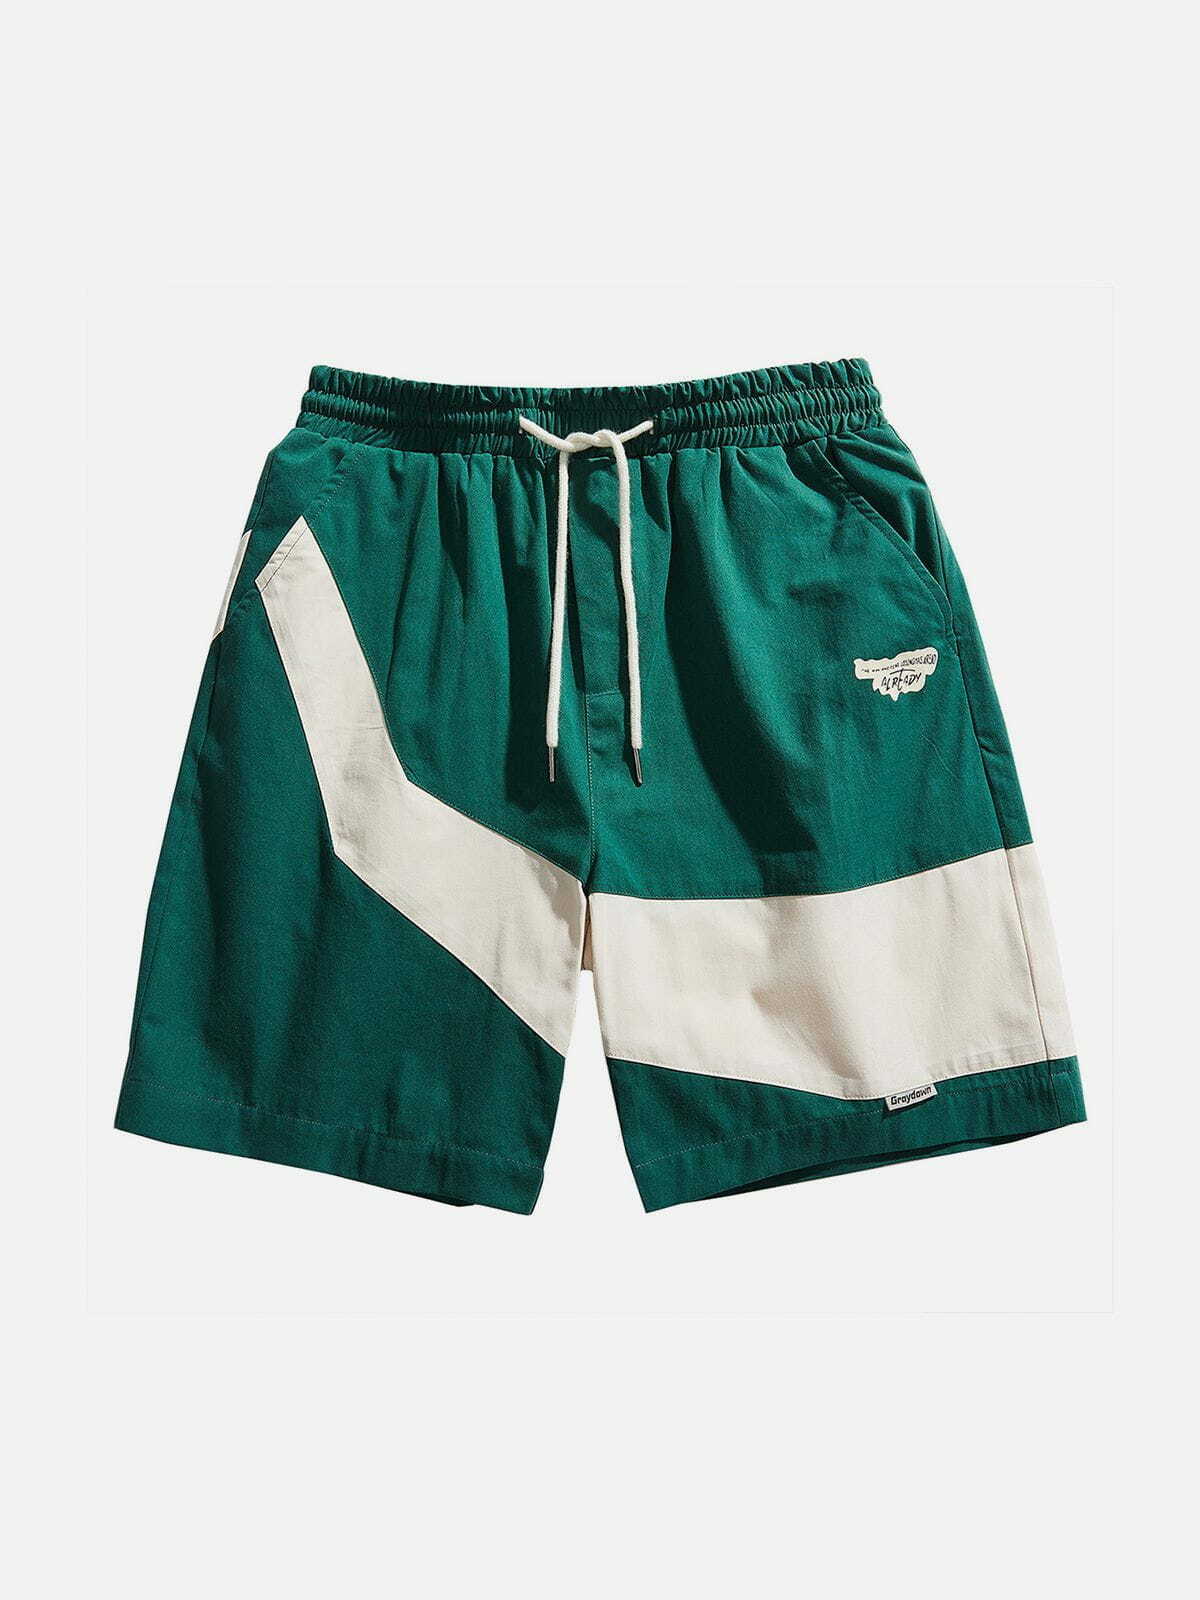 irregular color block patchwork shorts   edgy streetwear essential 8342